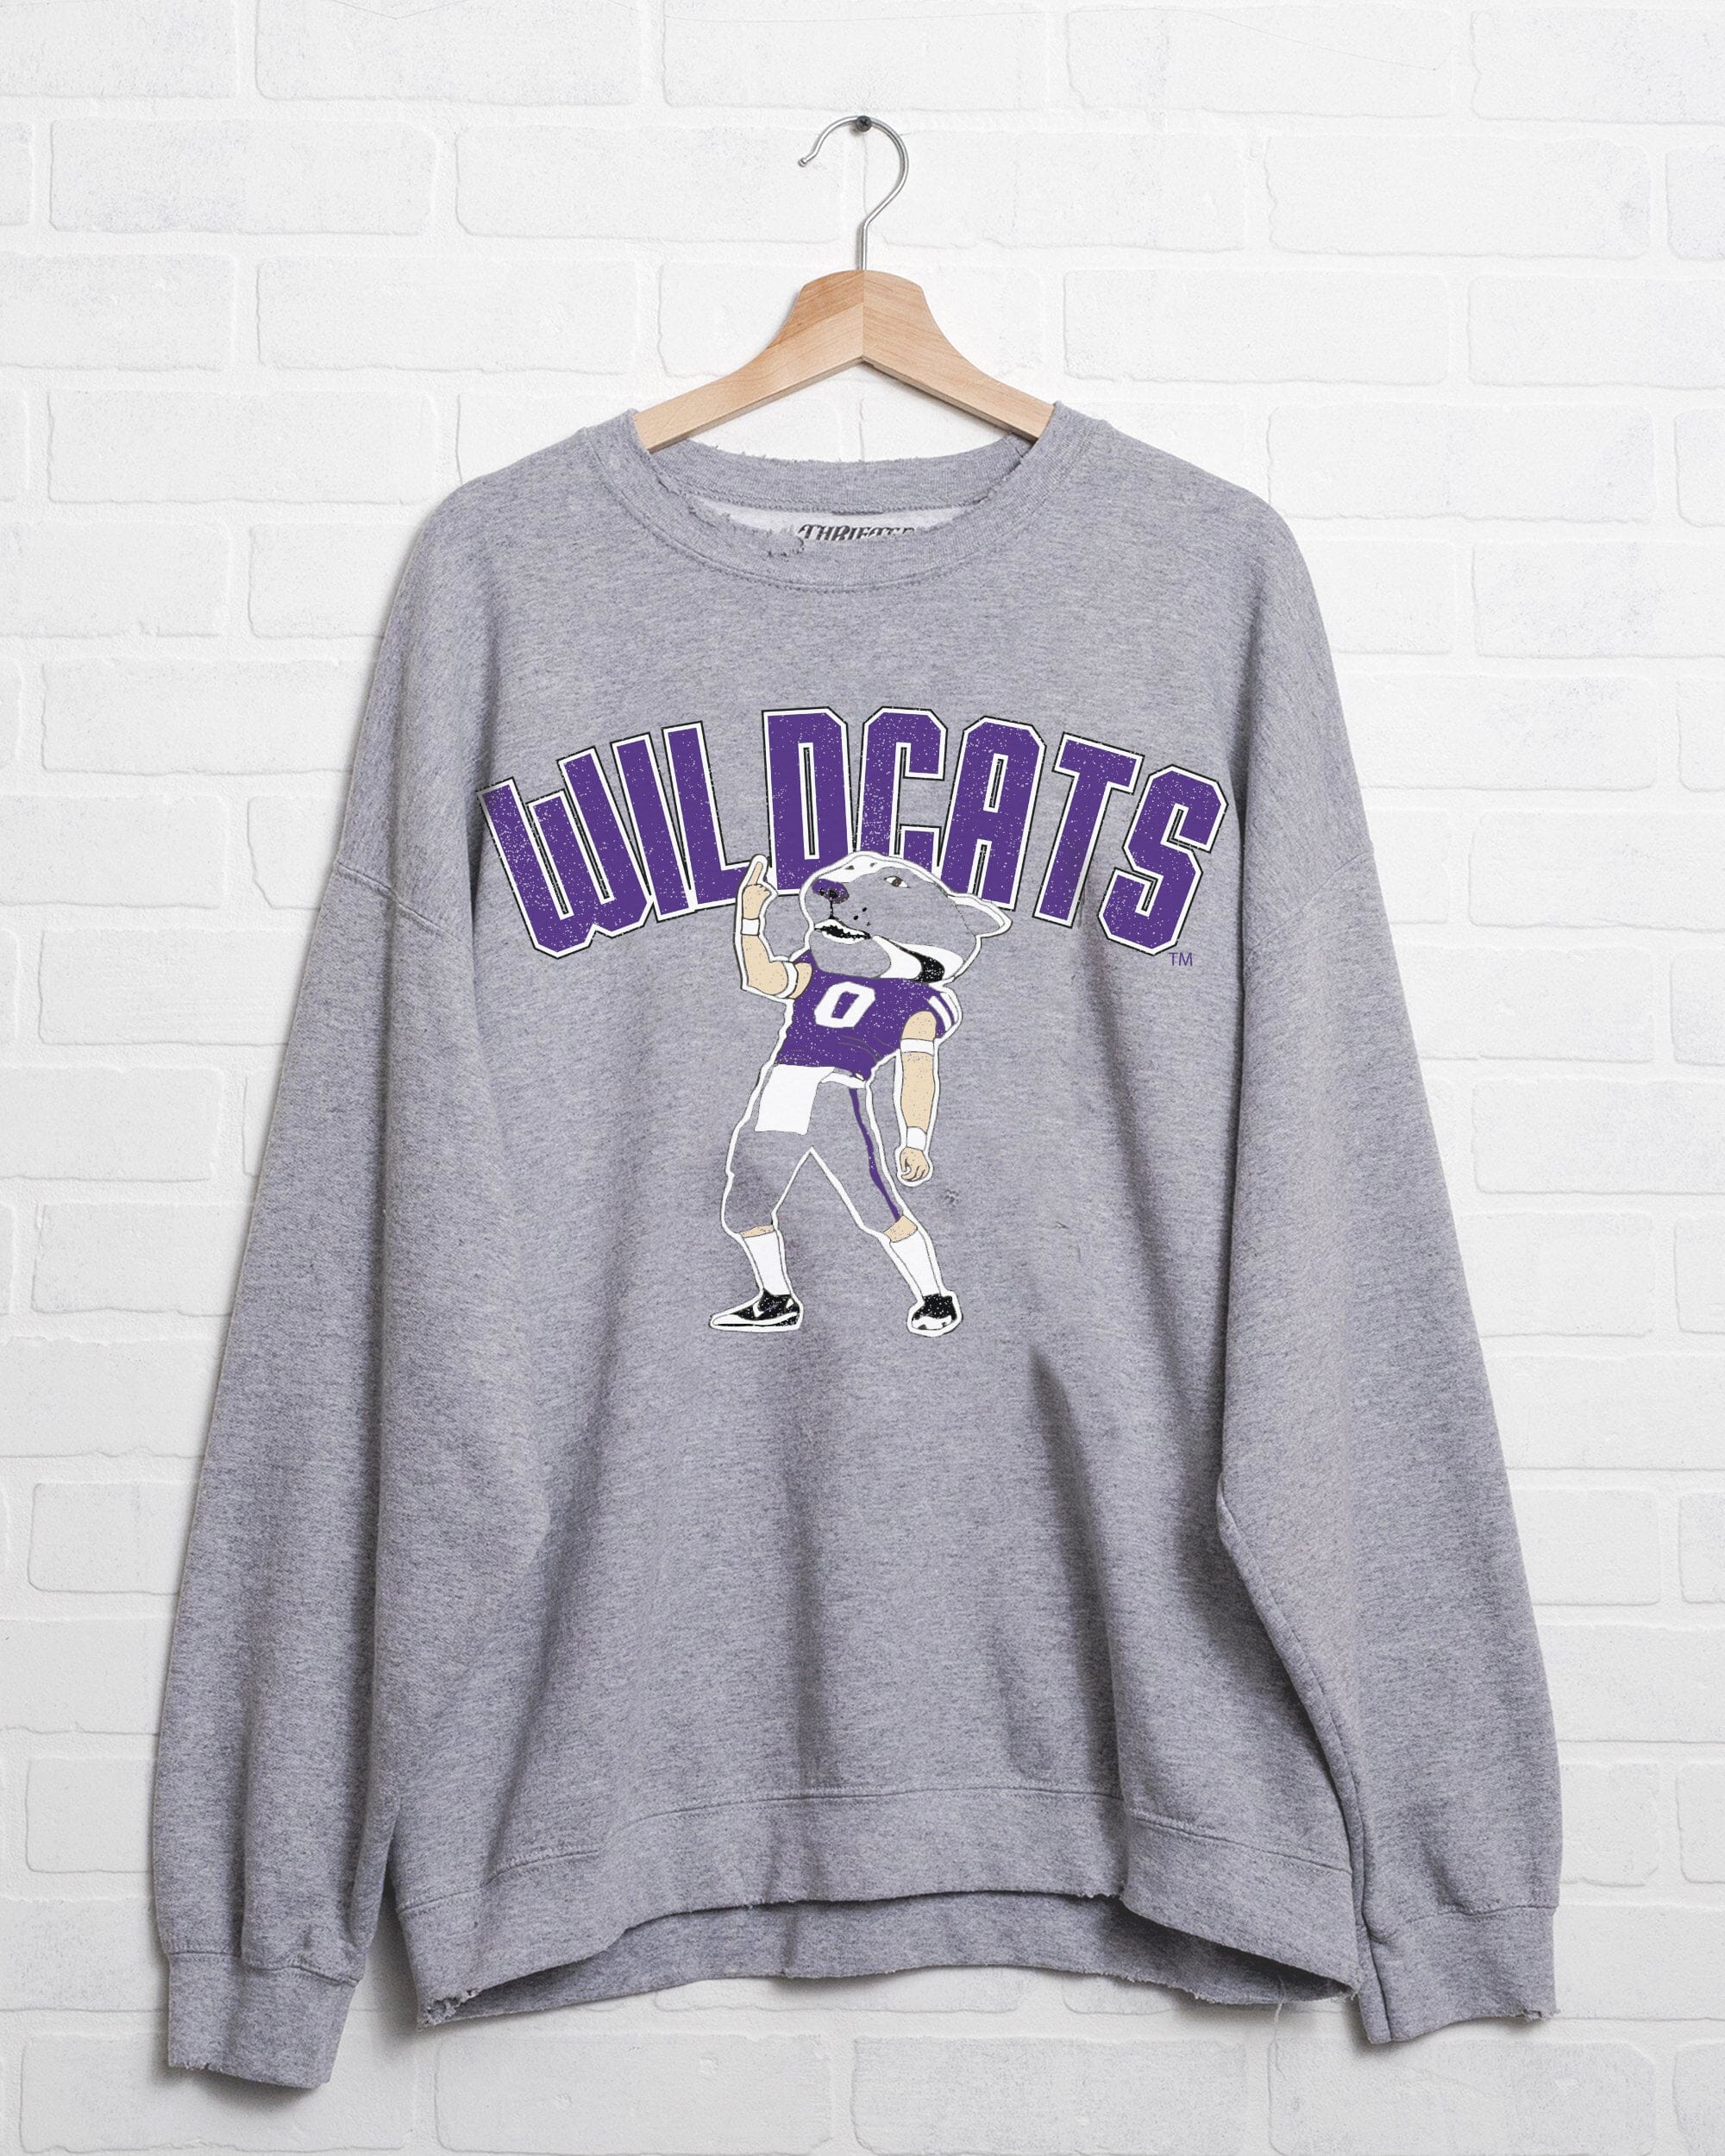 KSU Wildcats Cartoon Mascot Puff Ink Gray Thrifted Sweatshirt